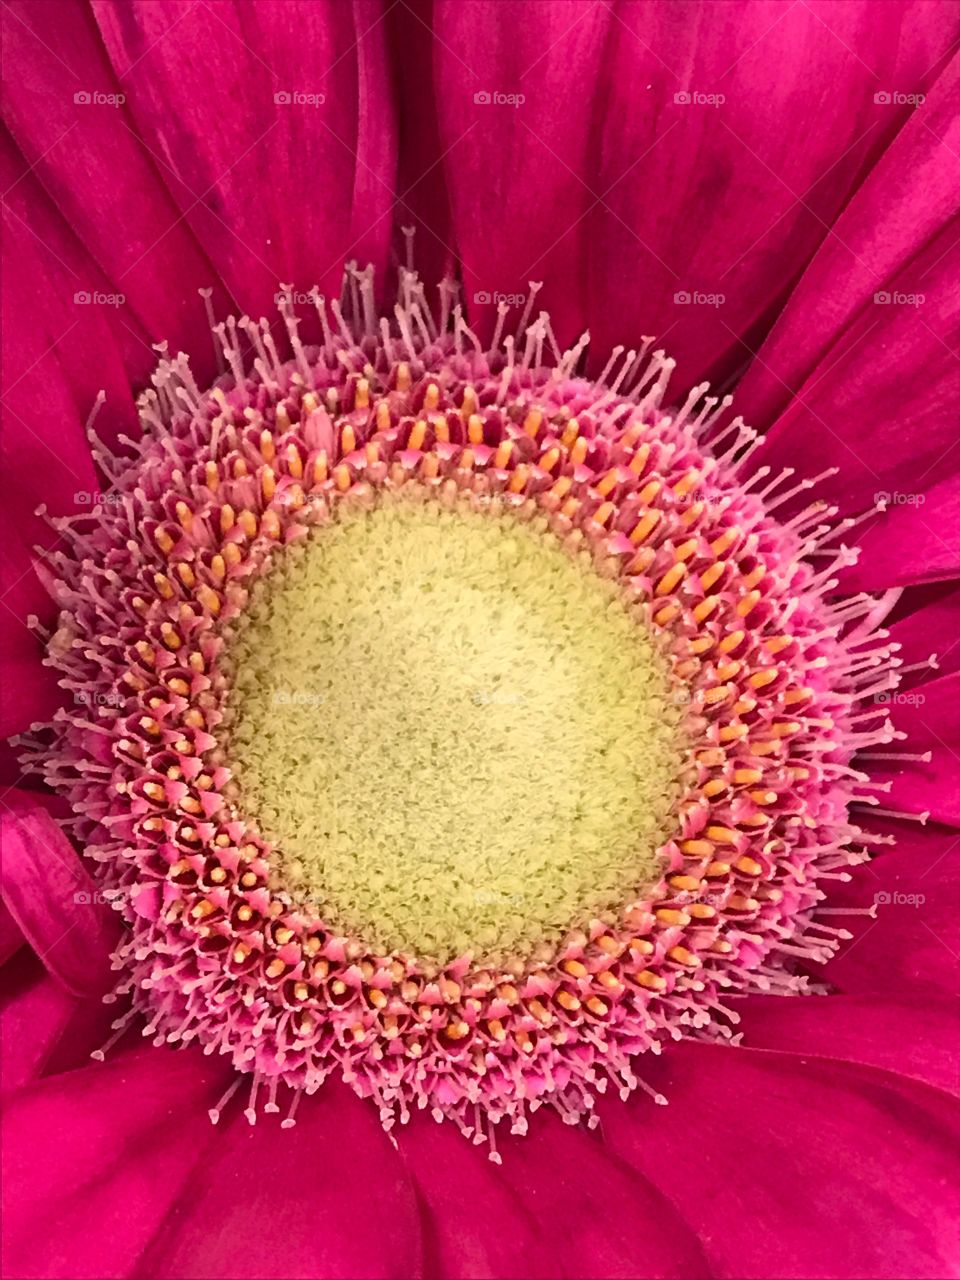 Close up flower